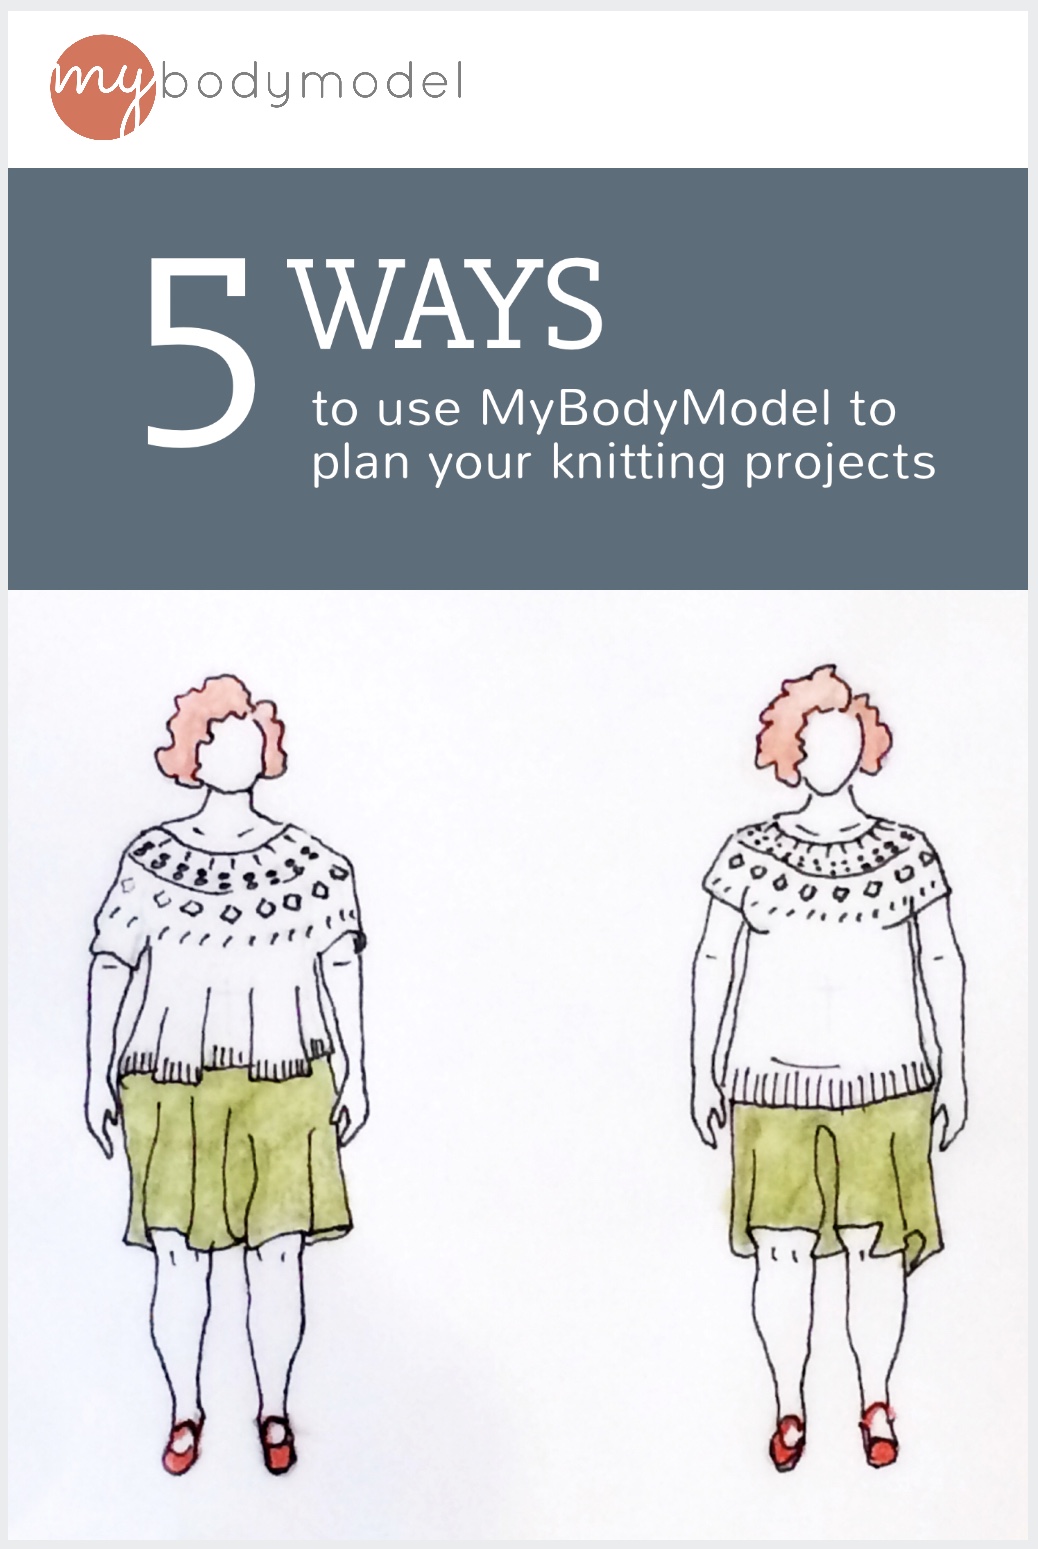 MyBodyModel 5 ways to use for knitting by Julie